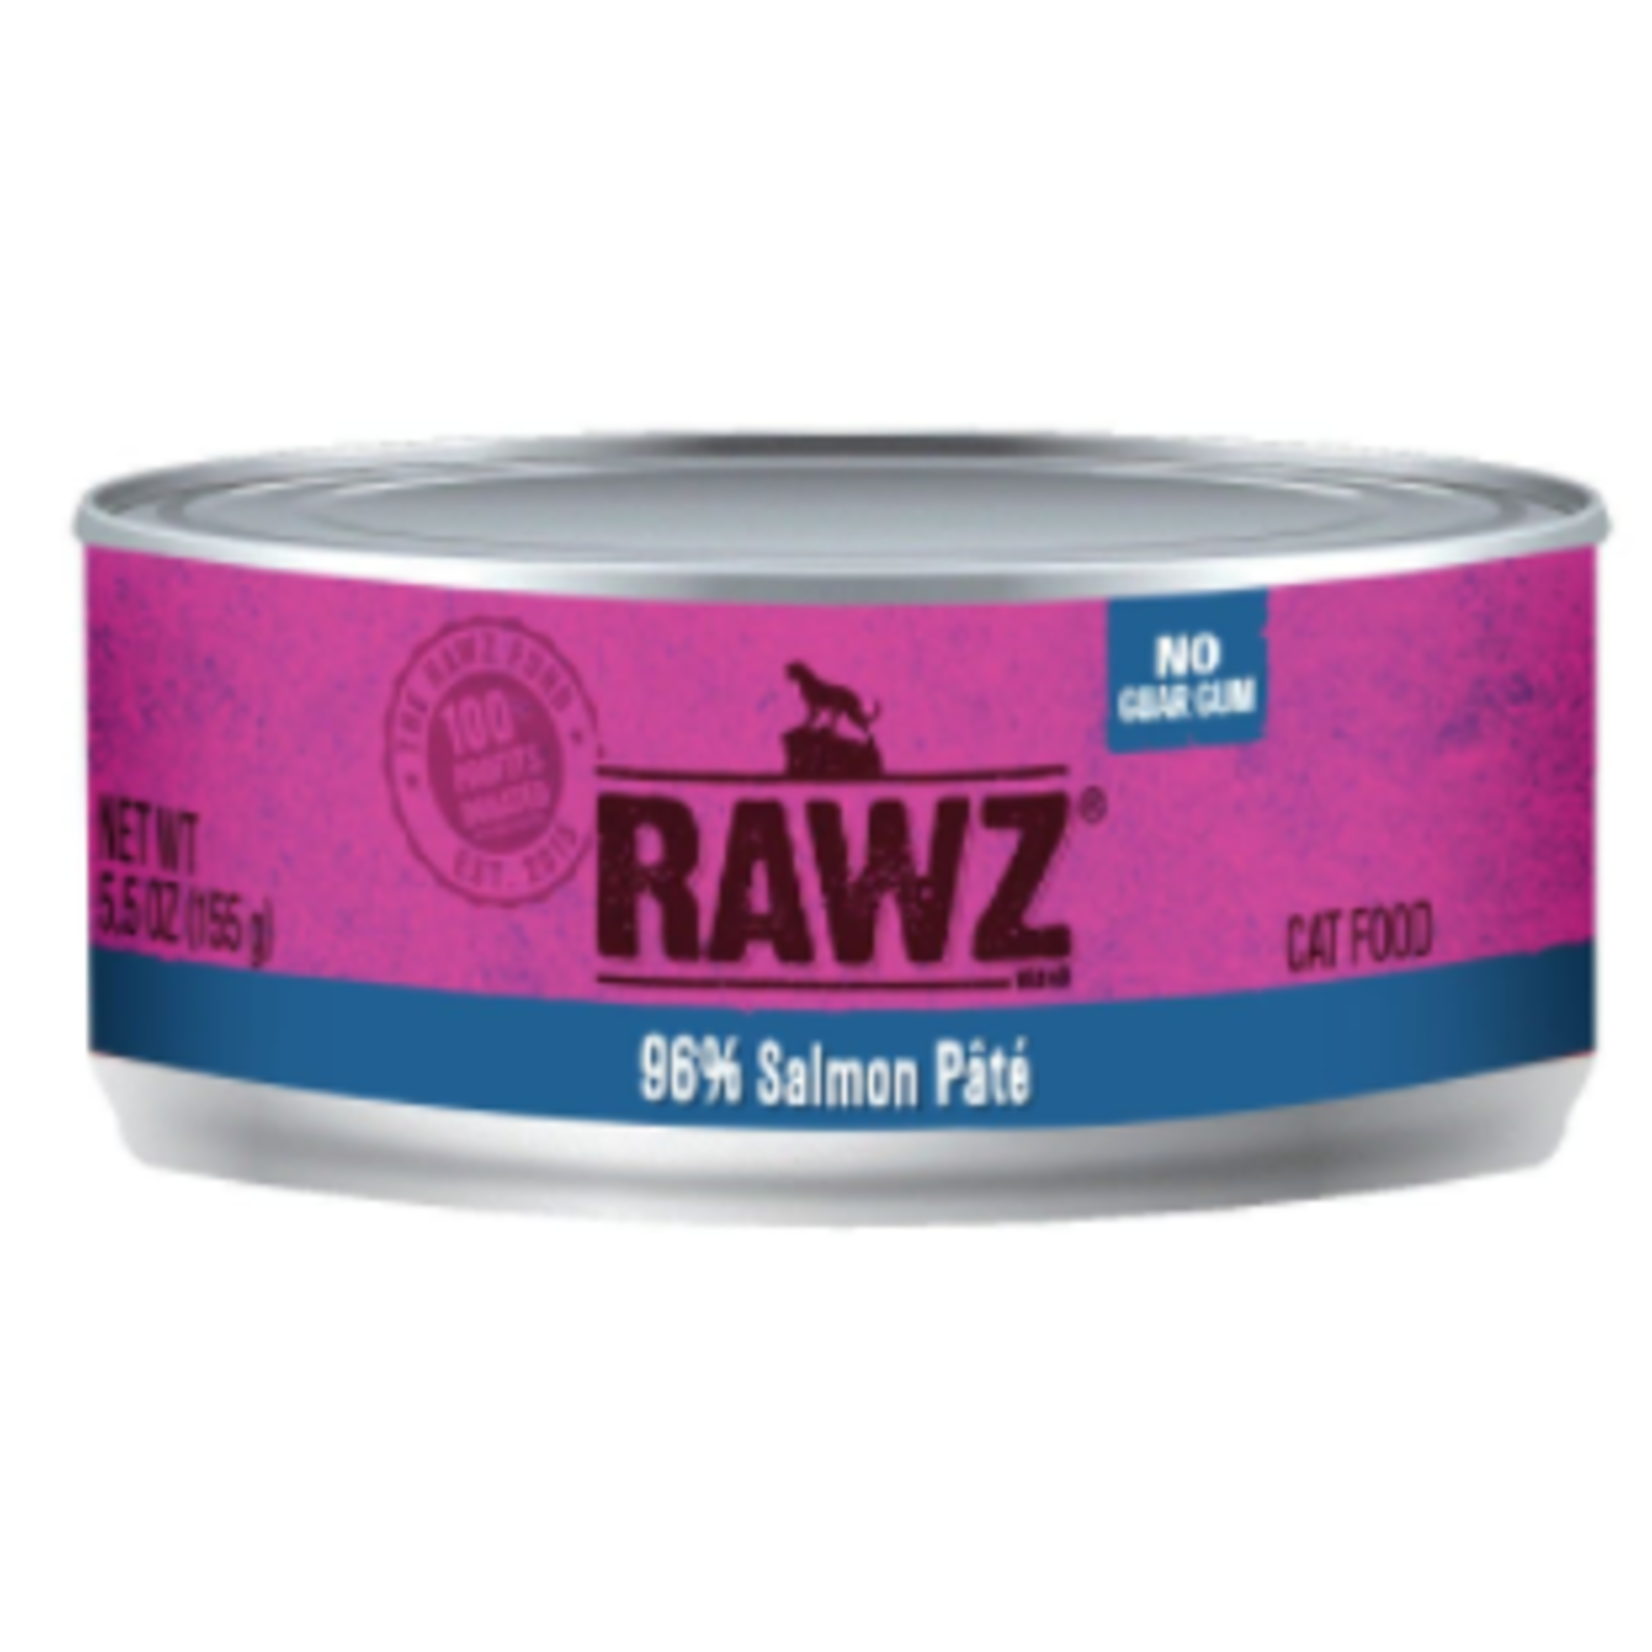 RAWZ 96% Salmon Pate - 85 g